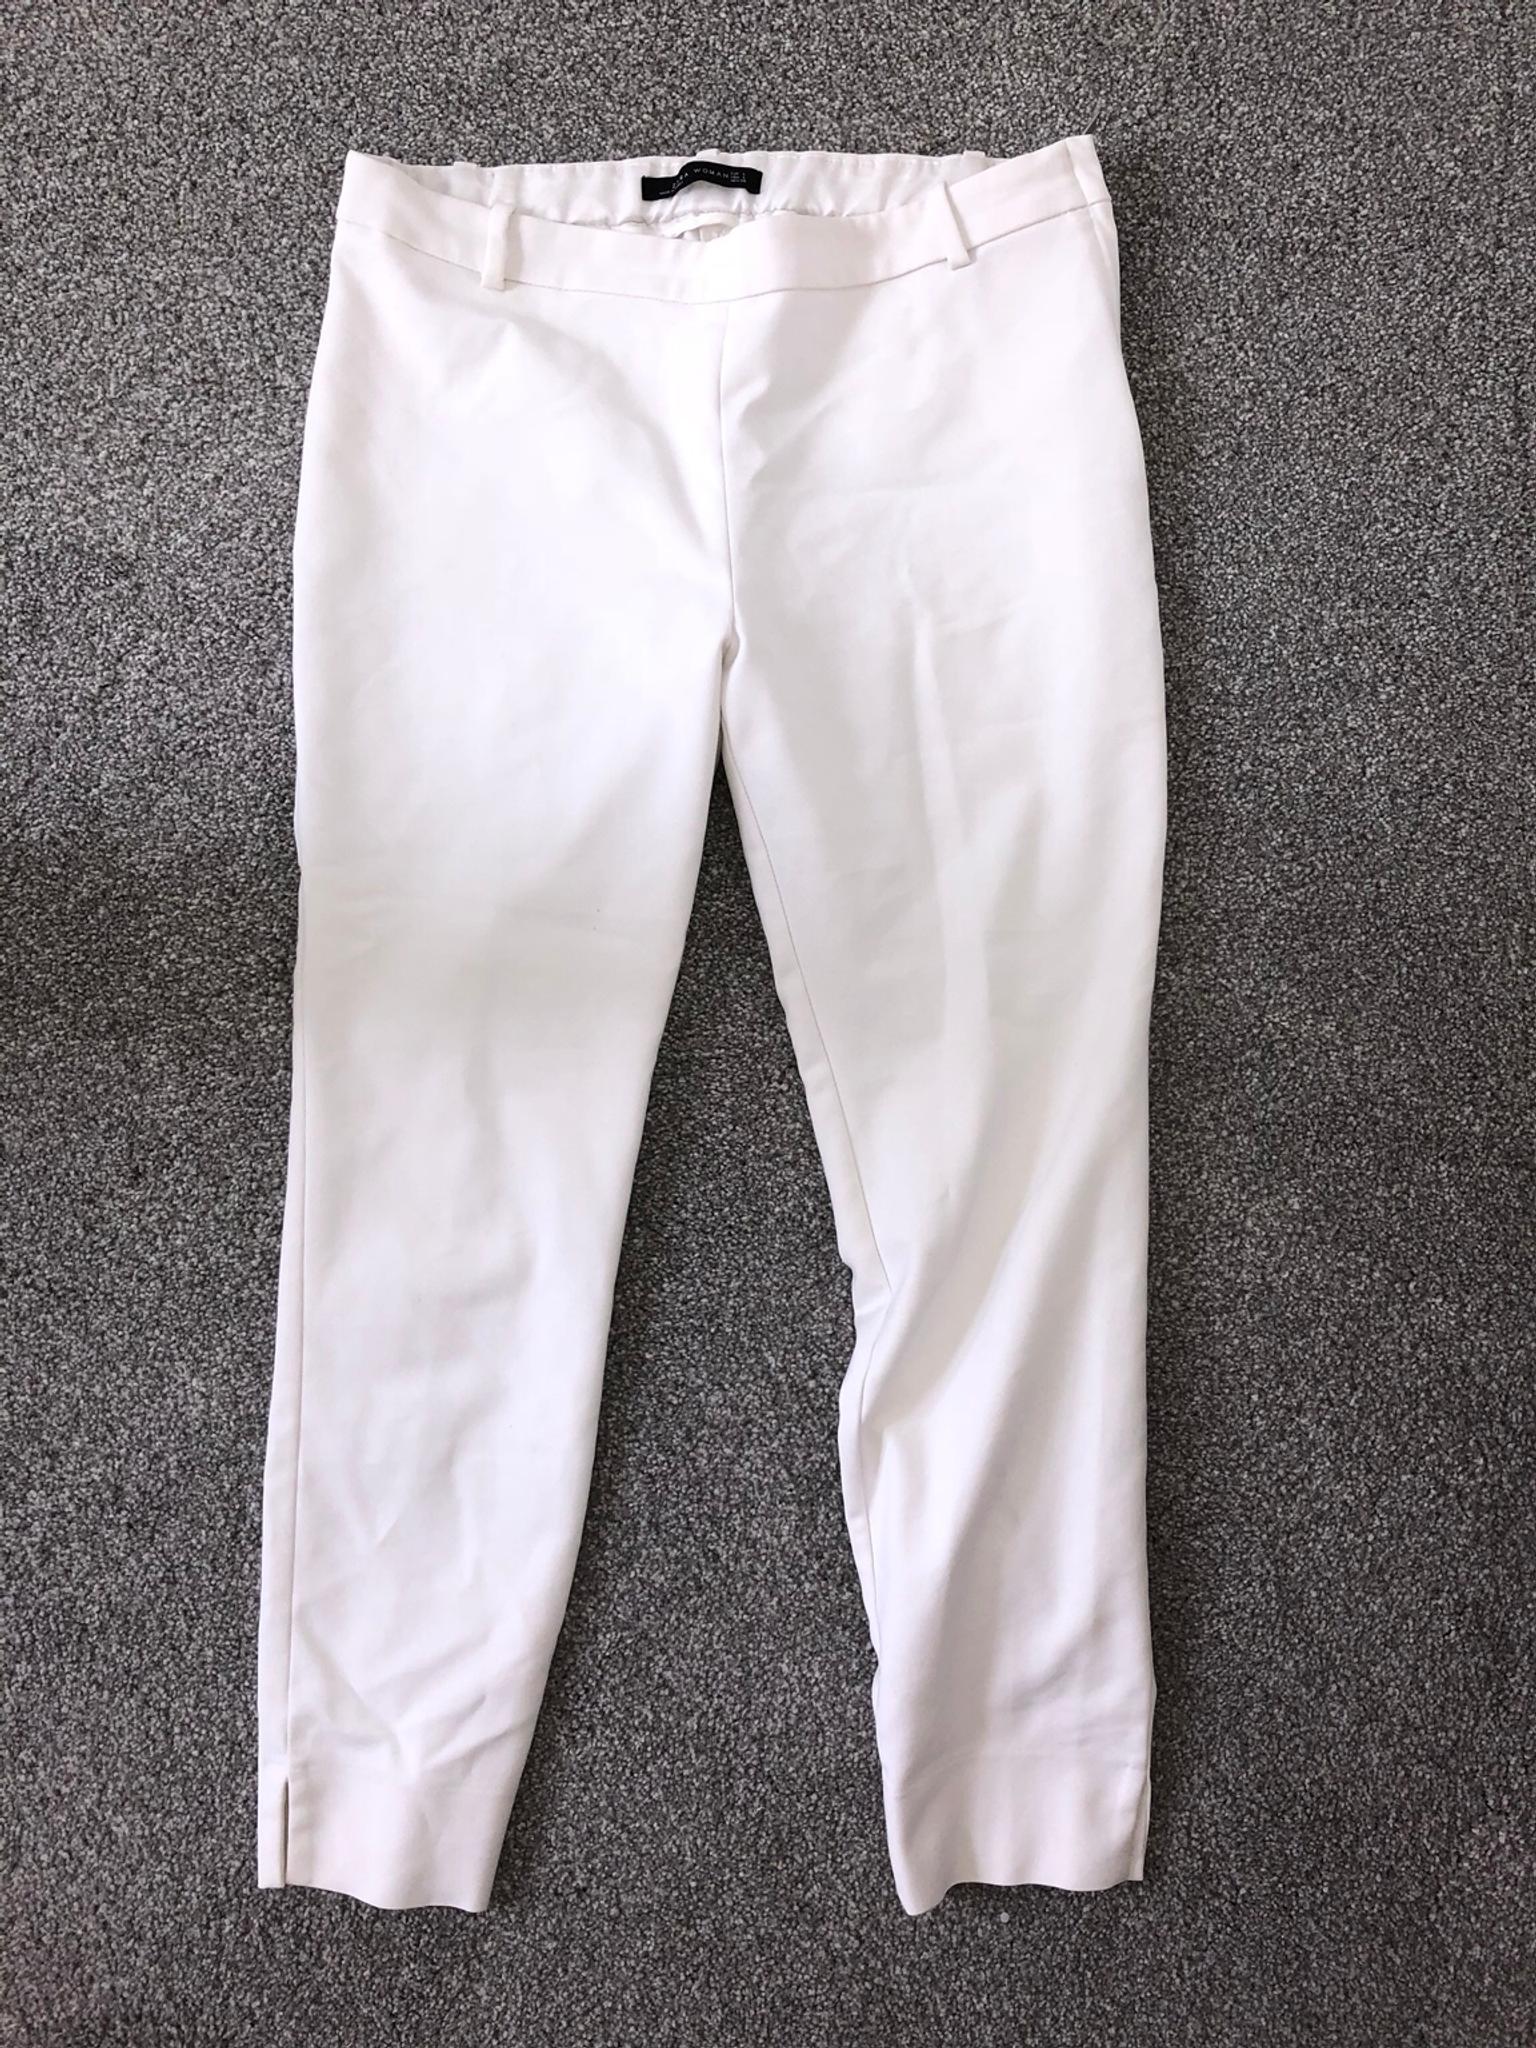 zara white trouser